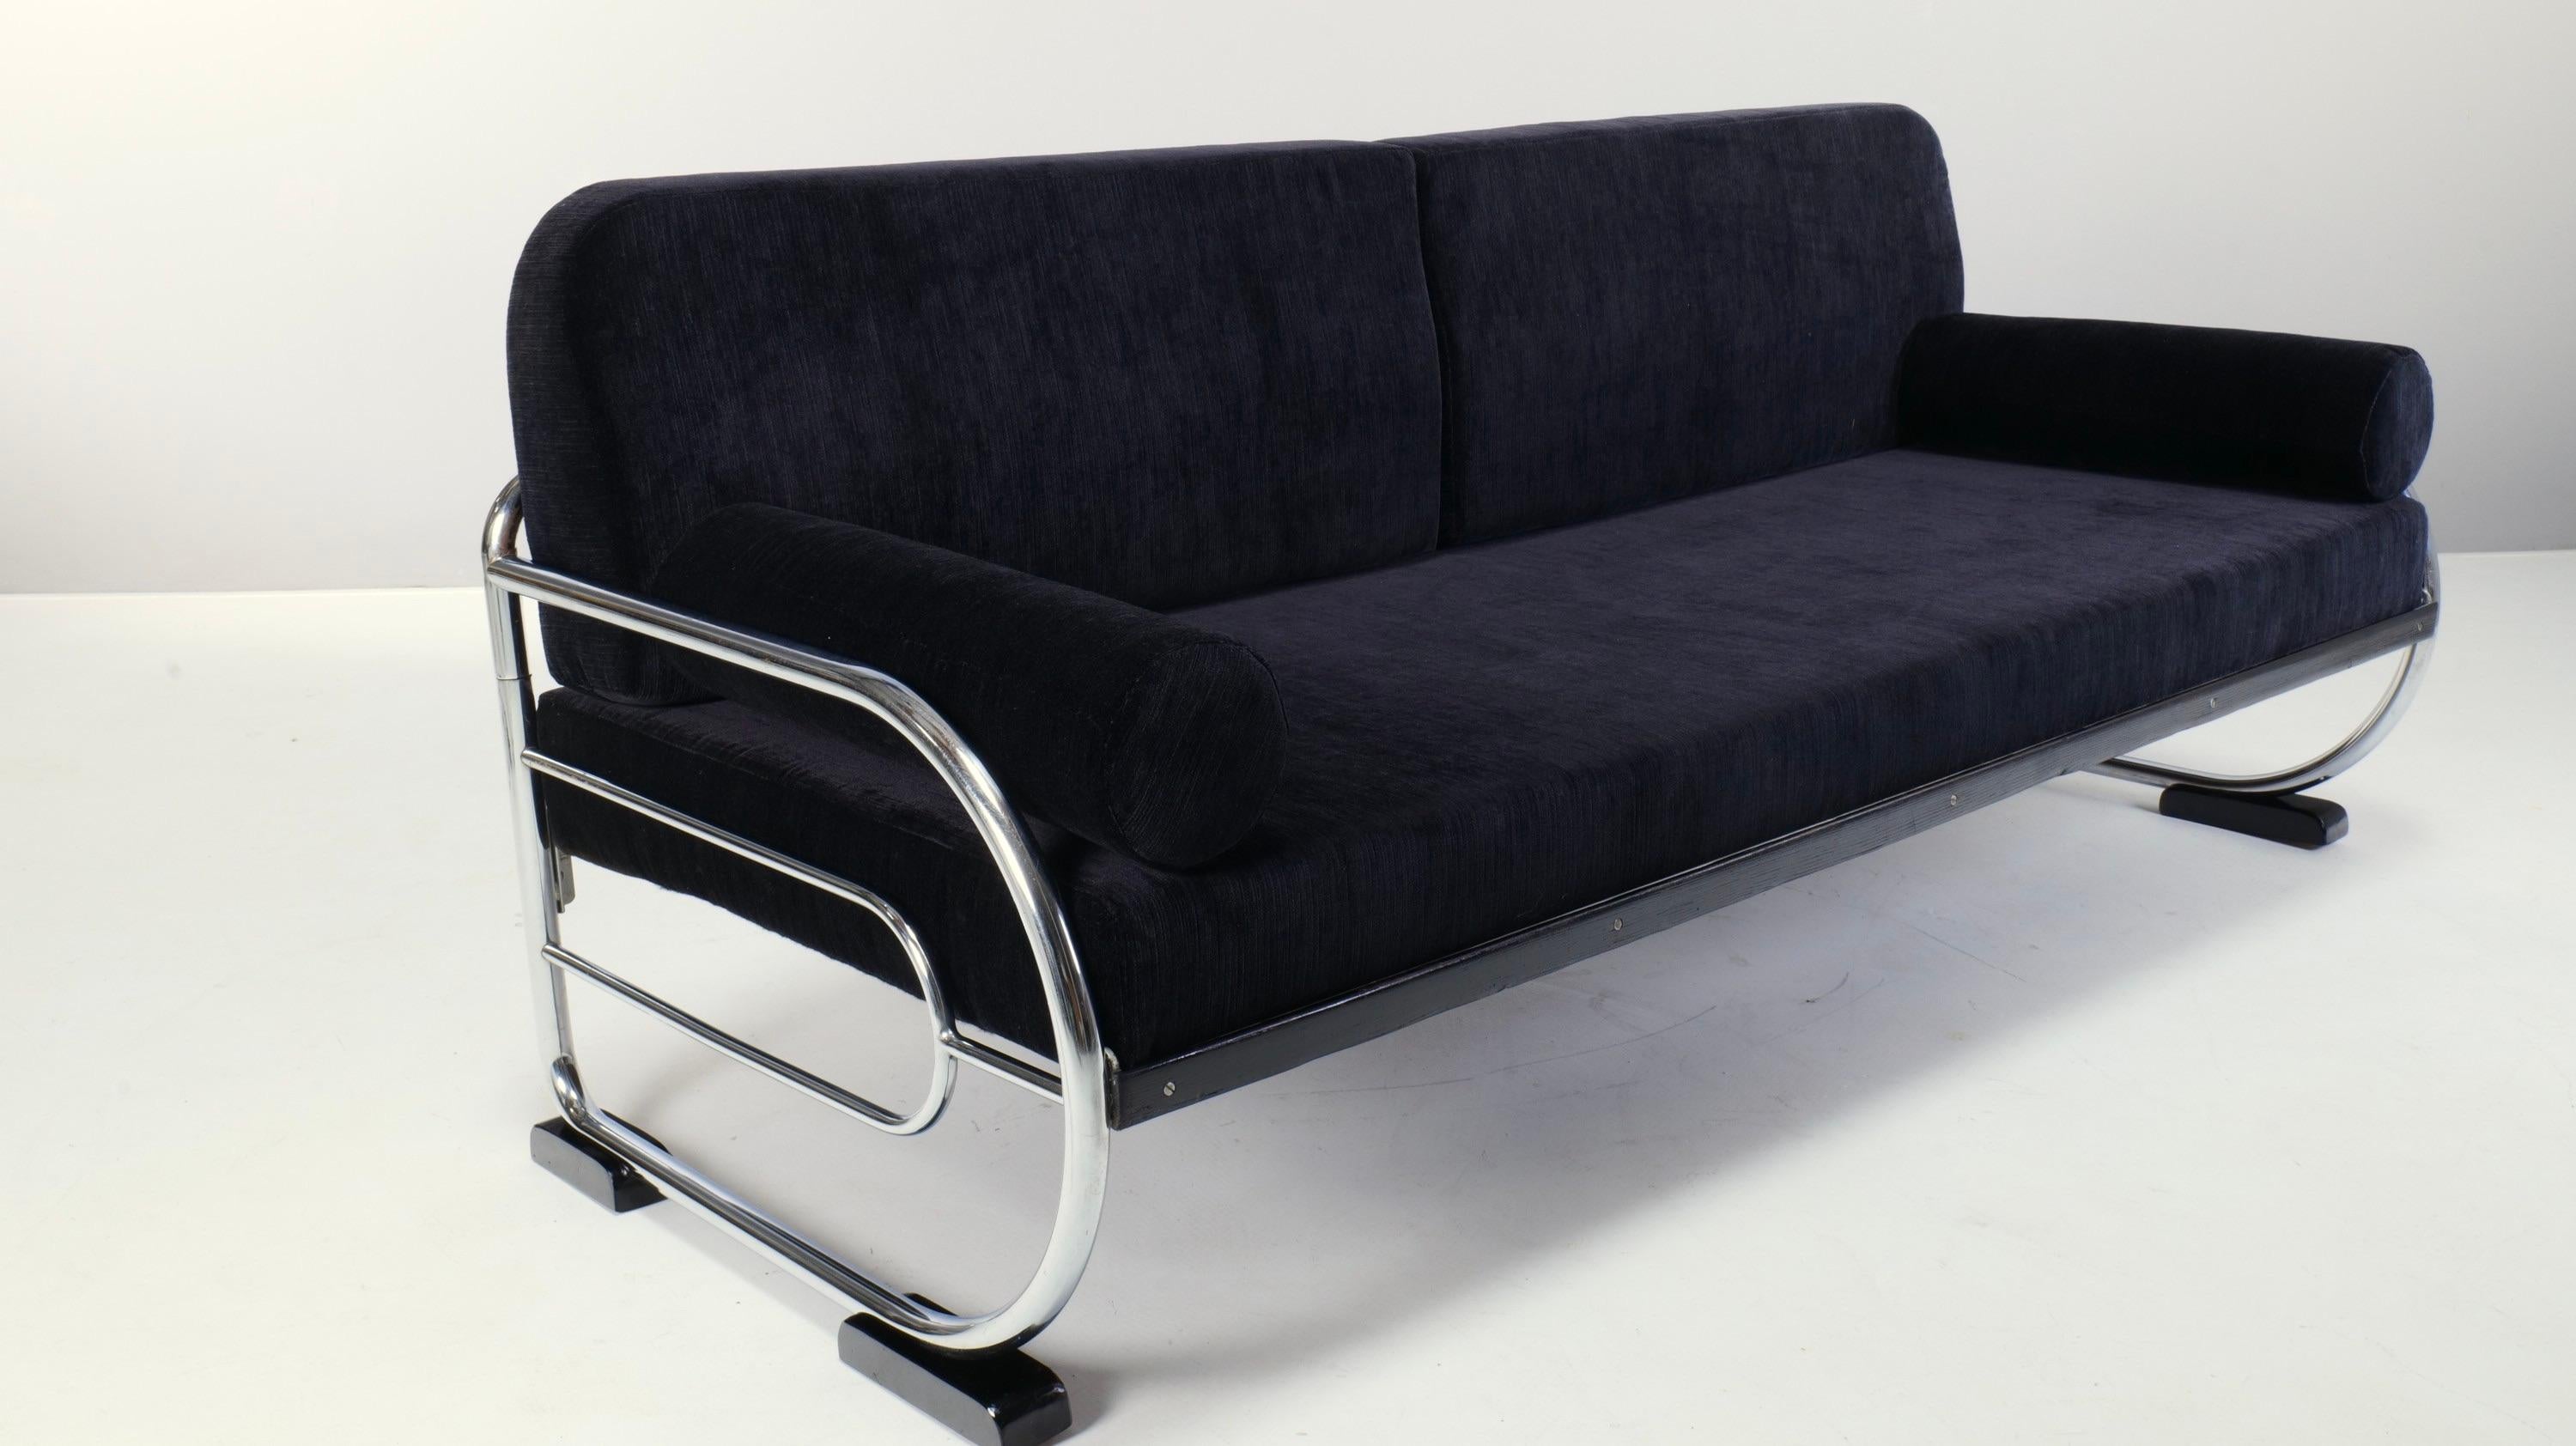 Restored Art Deco / Bauhaus design tubular steel sofa from the 1930s.

This 